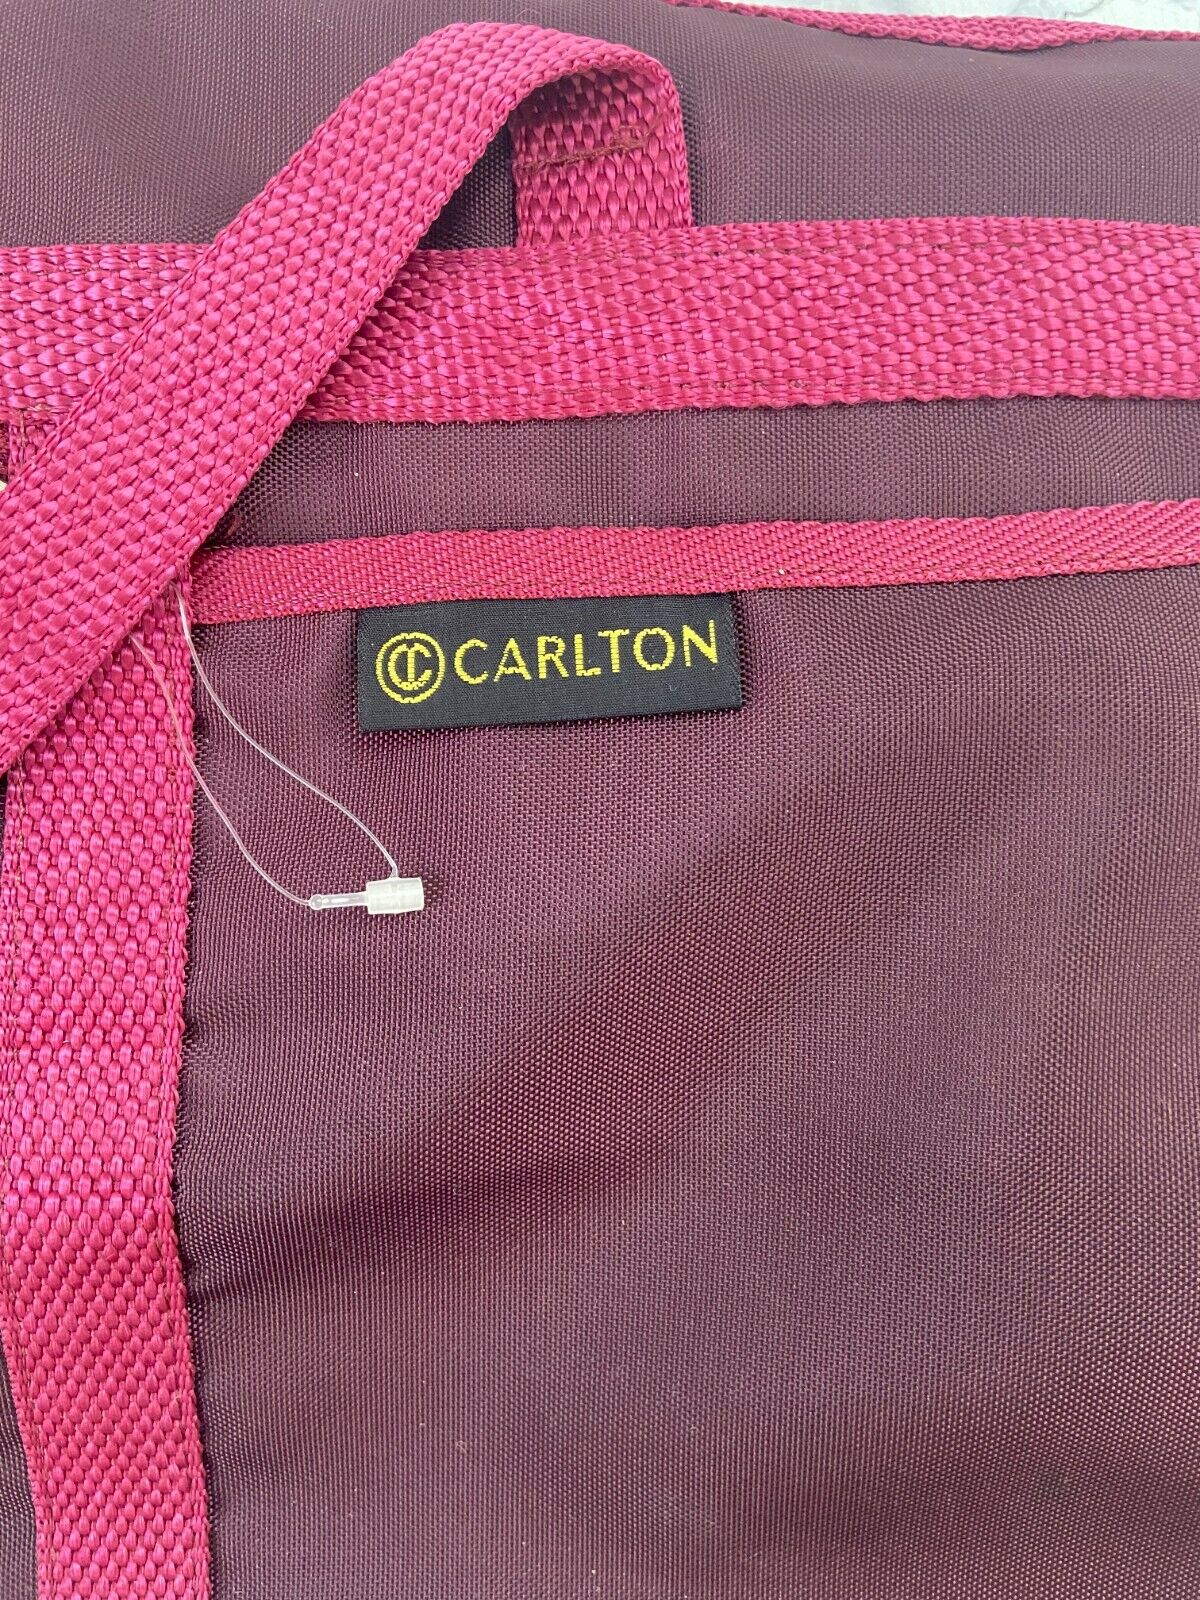 Carlton bag - purple